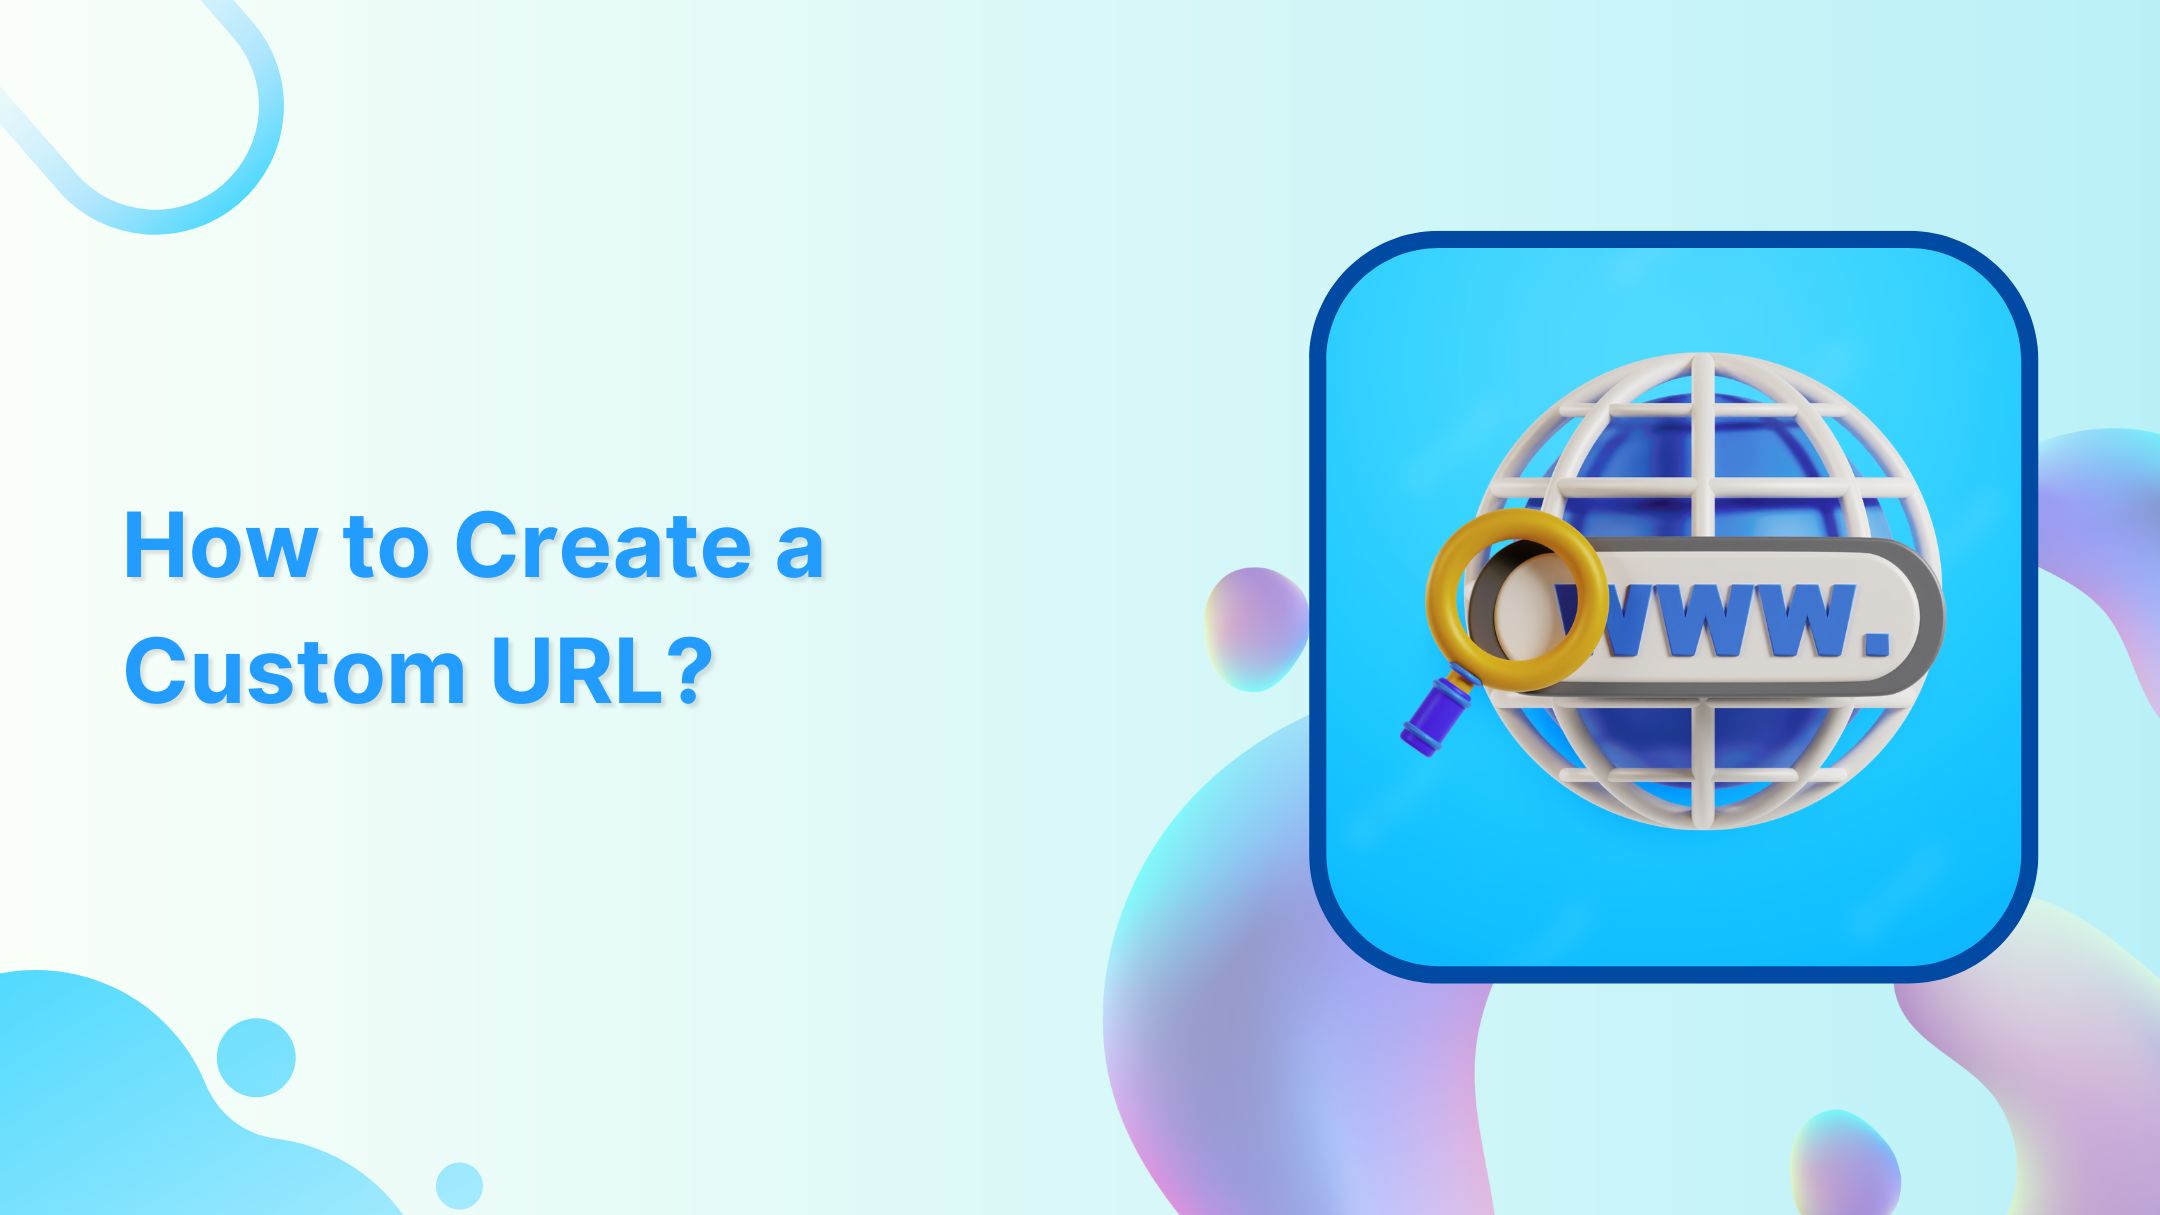 How to Create a Custom URL: Step-By-Step Guide